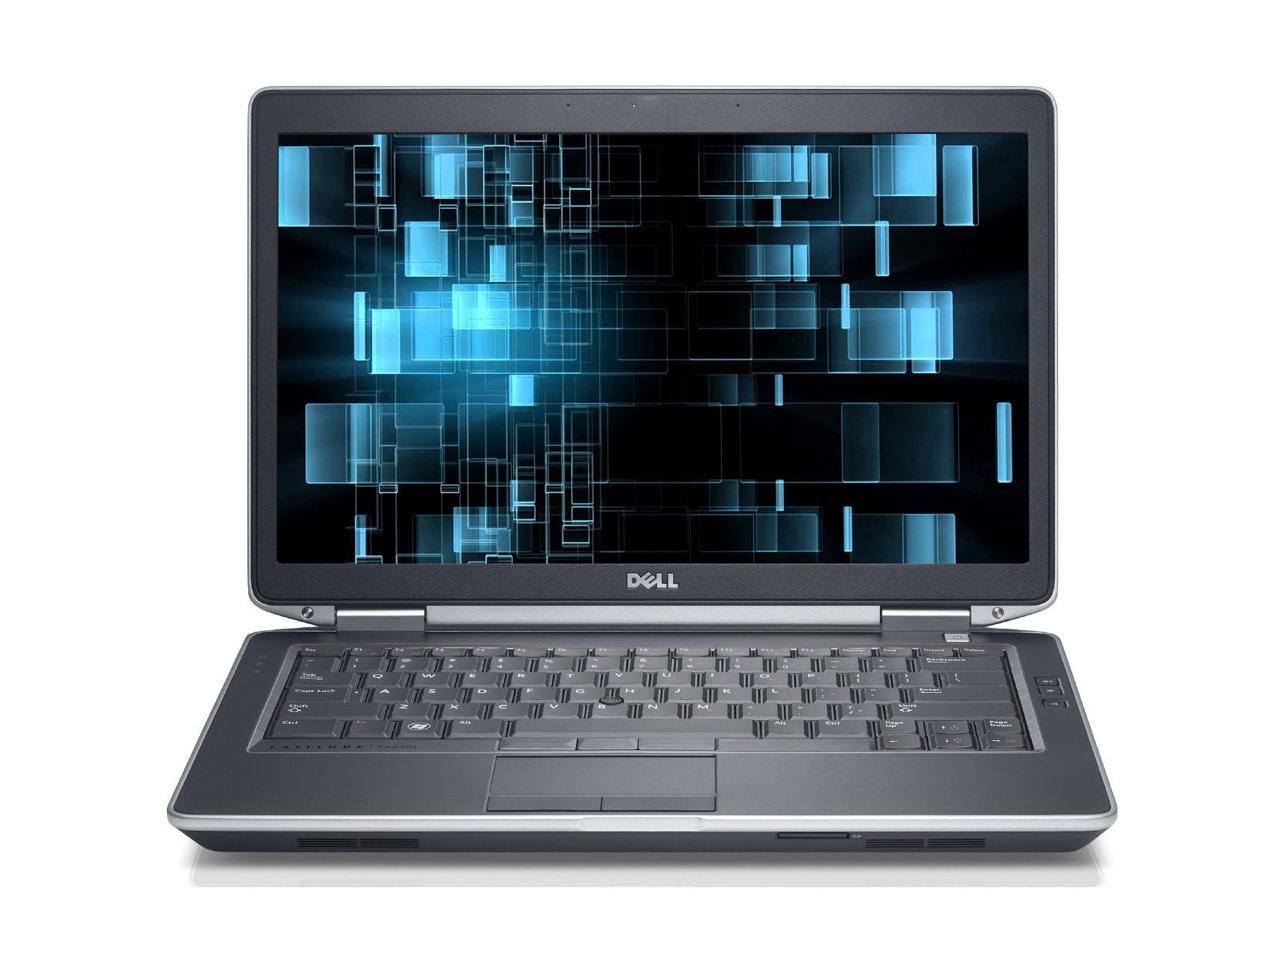 Dell Latitude E6440 Intel i5 Dual Core 2700 MHz 500Gig Serial ATA 4GB DVD-RW 14.0" WideScreen LCD Windows 10 Professional 64 Bit Laptop Notebook